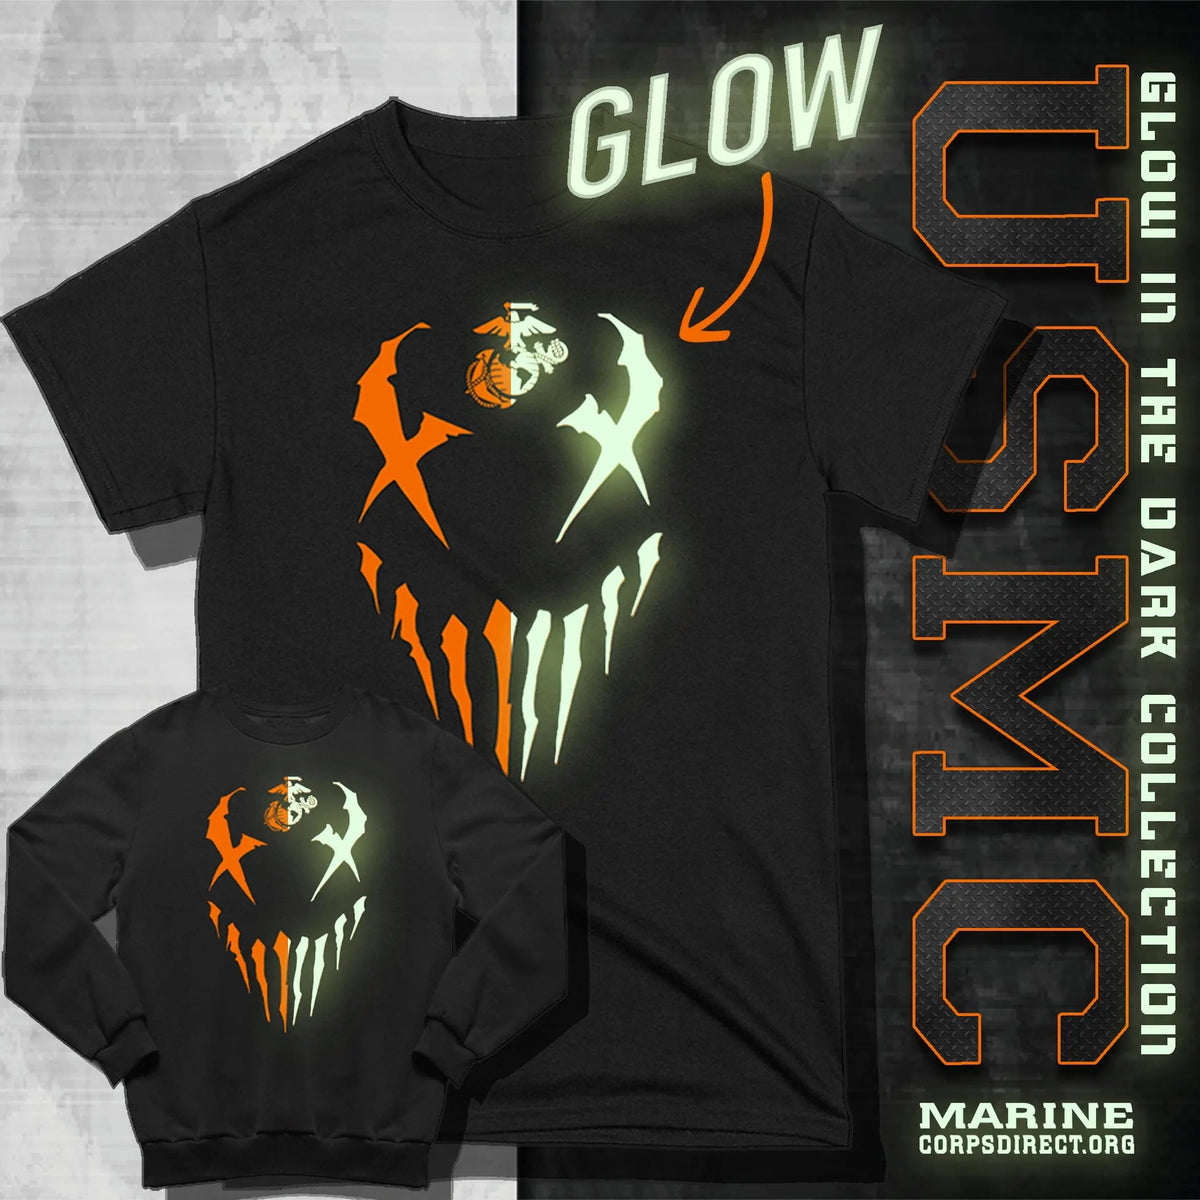 Limited Edition Glow In The Dark Marines Sweatshirt